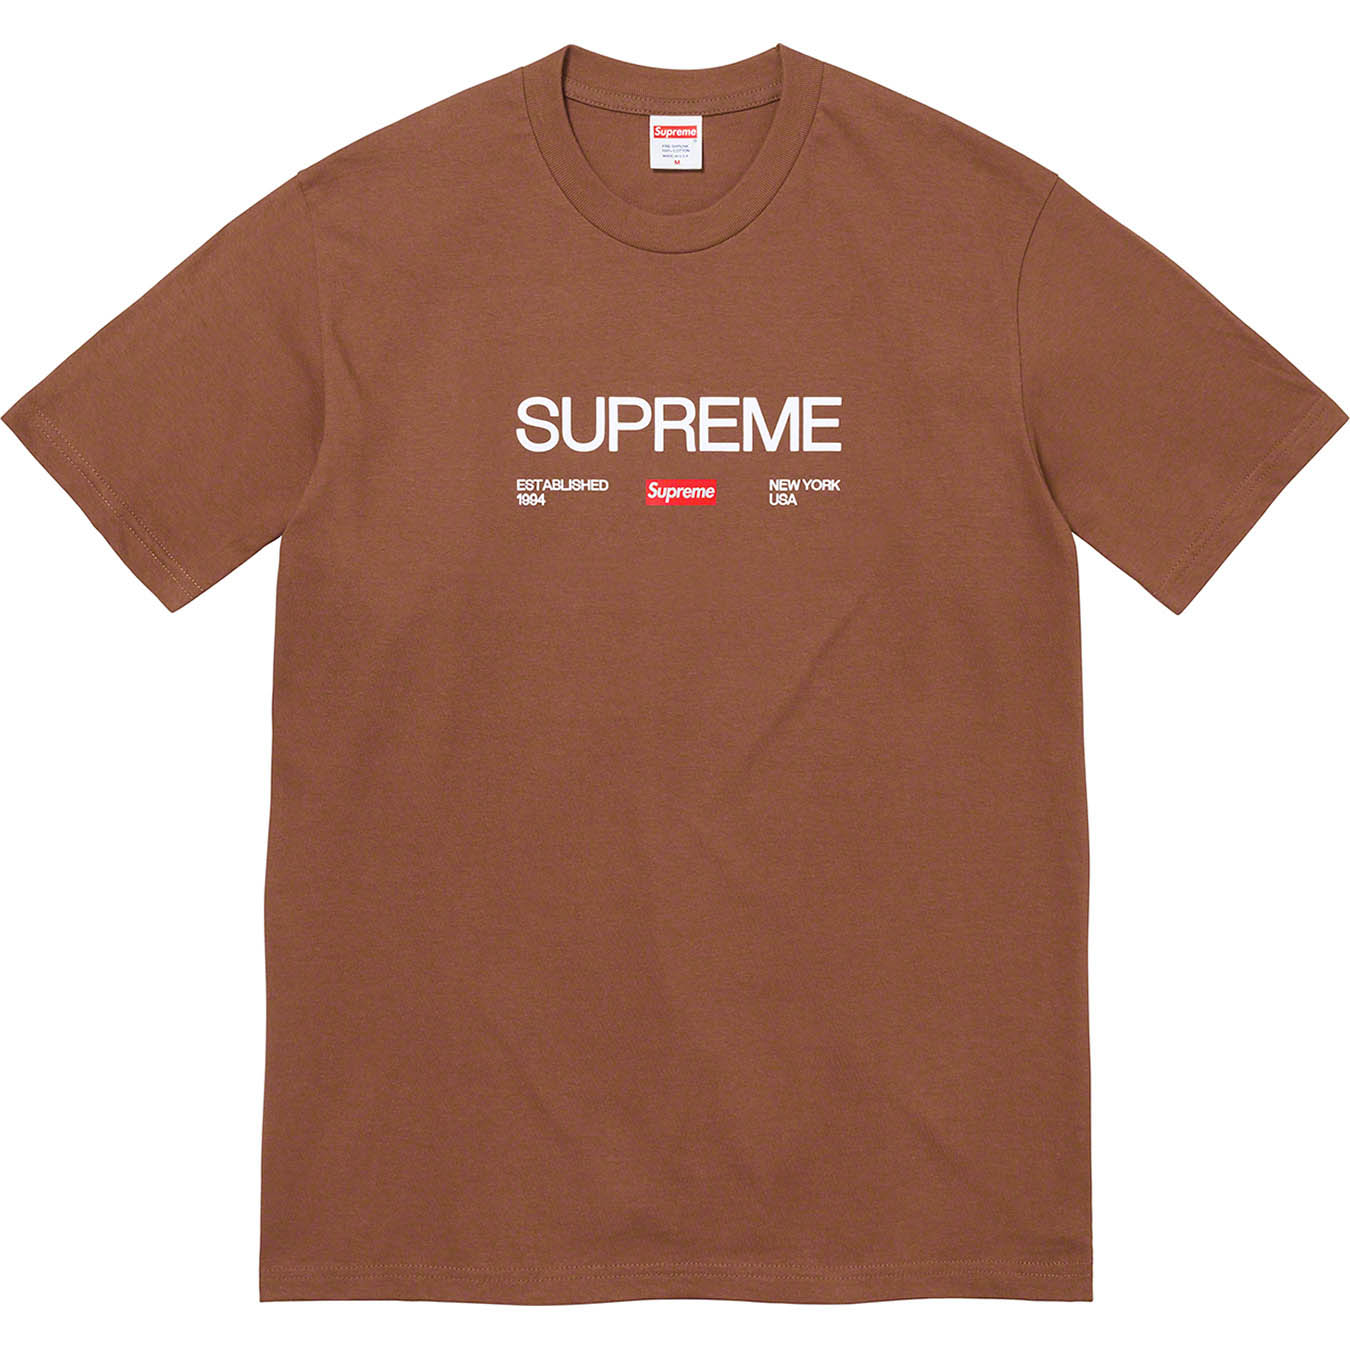 Supreme Est. 1994 Tee